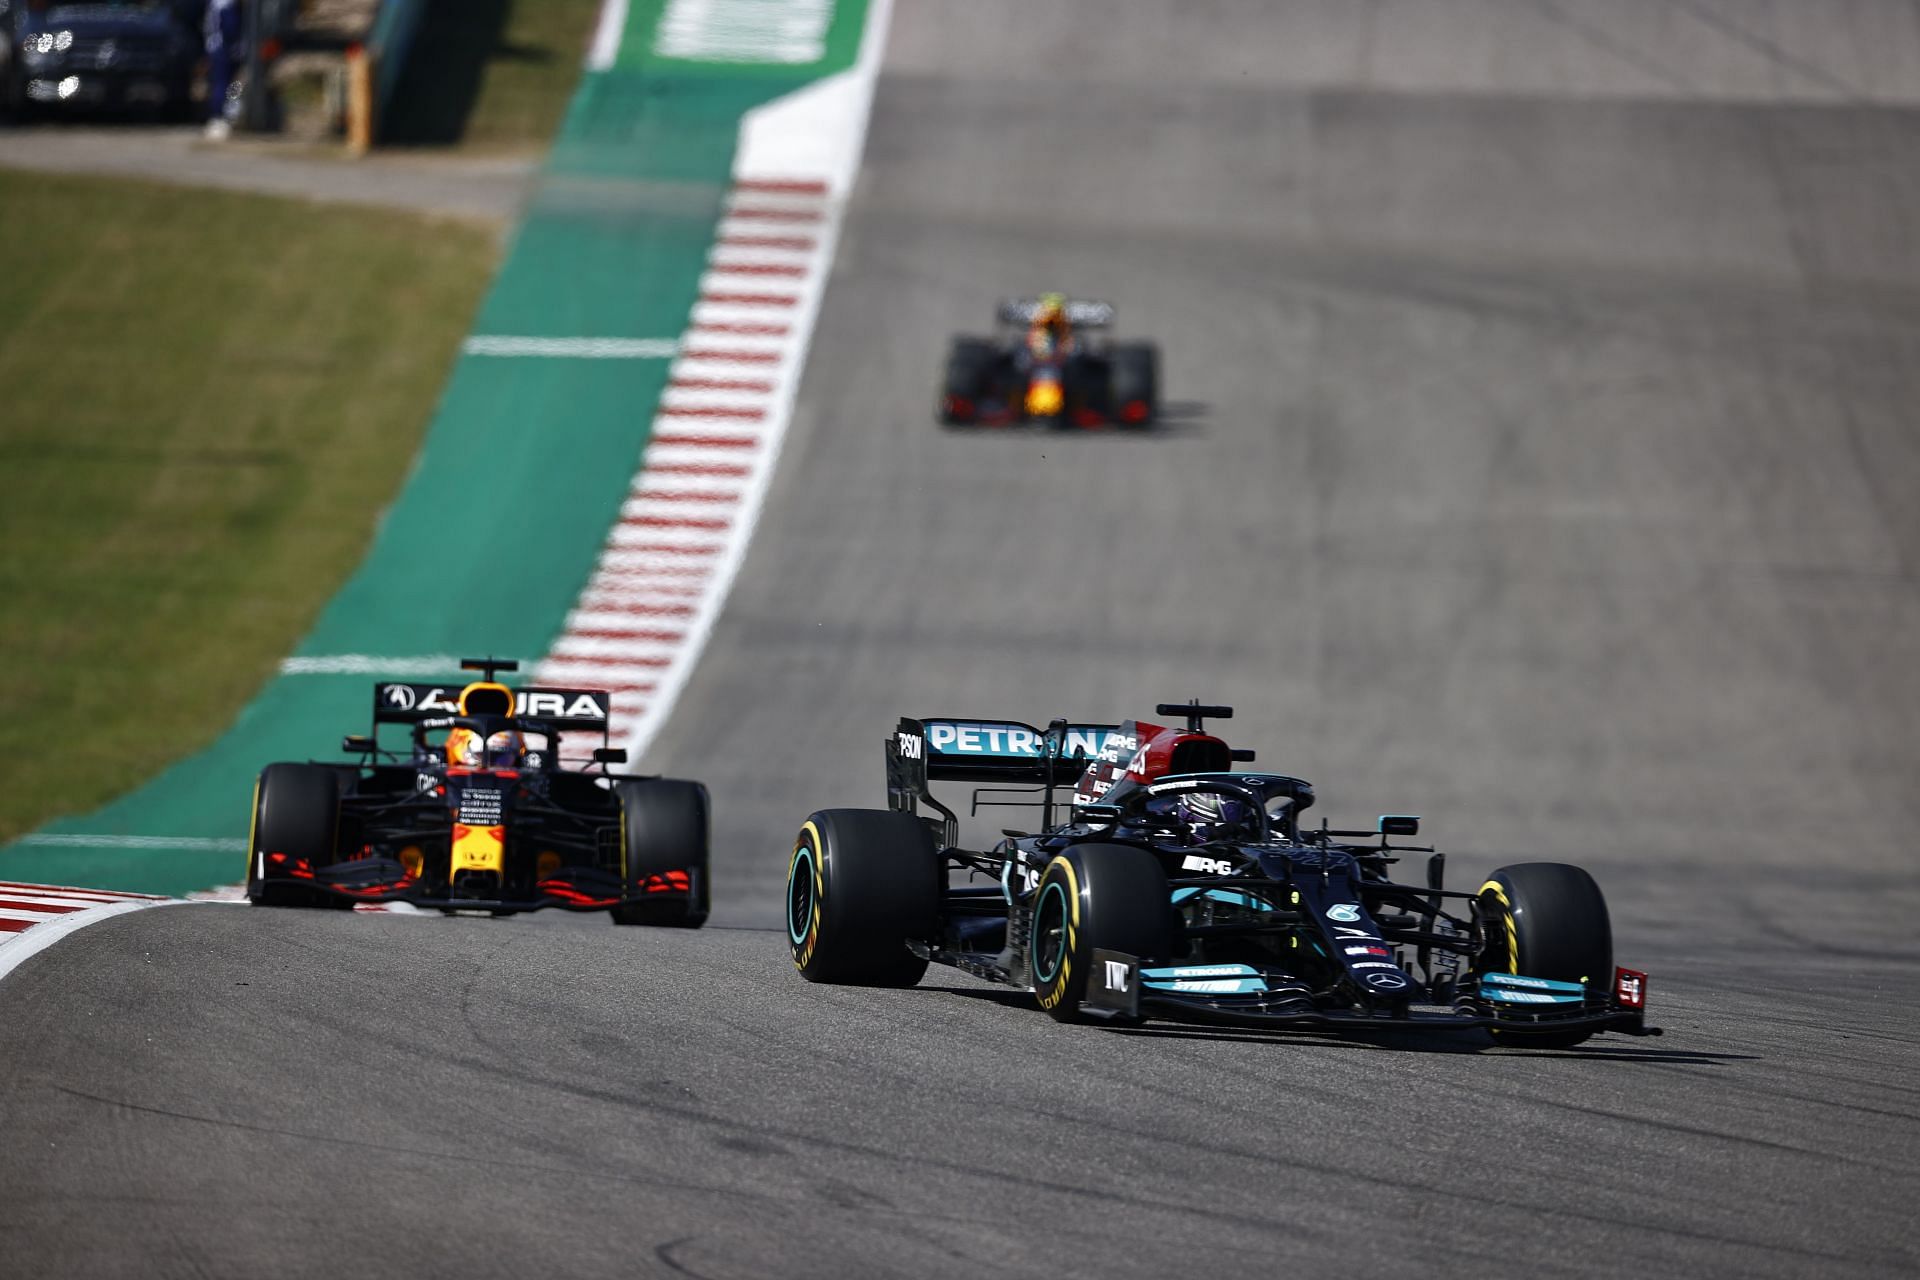 F1 Grand Prix of USA - Max Verstappen battles Lewis Hamilton in Austin, Texas.